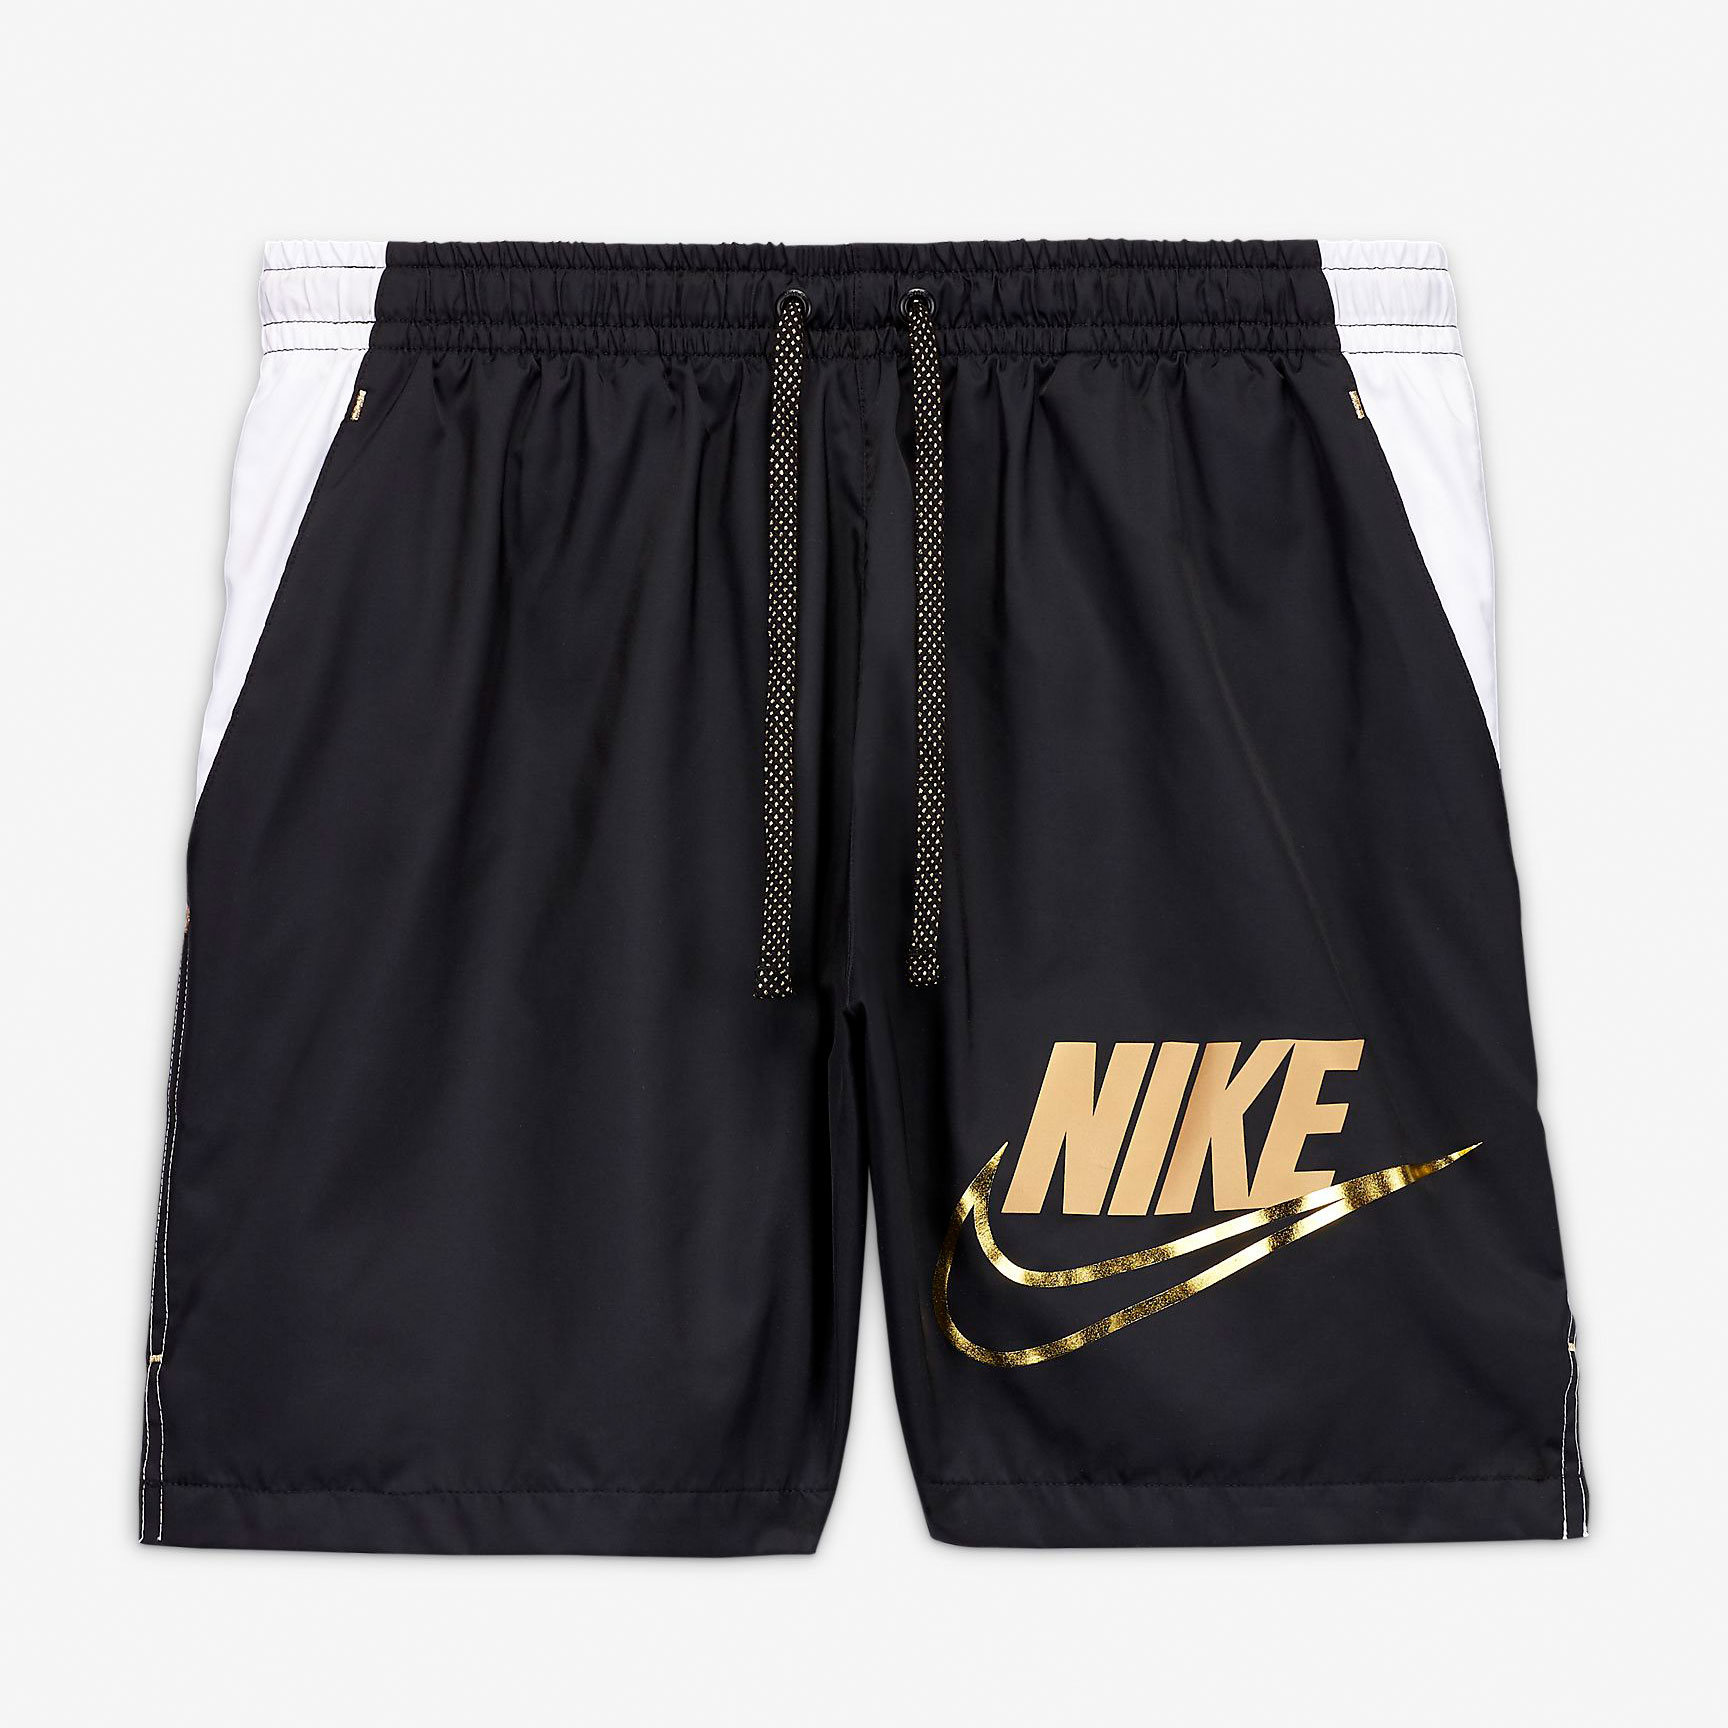 nike-shorts-black-white-gold-1